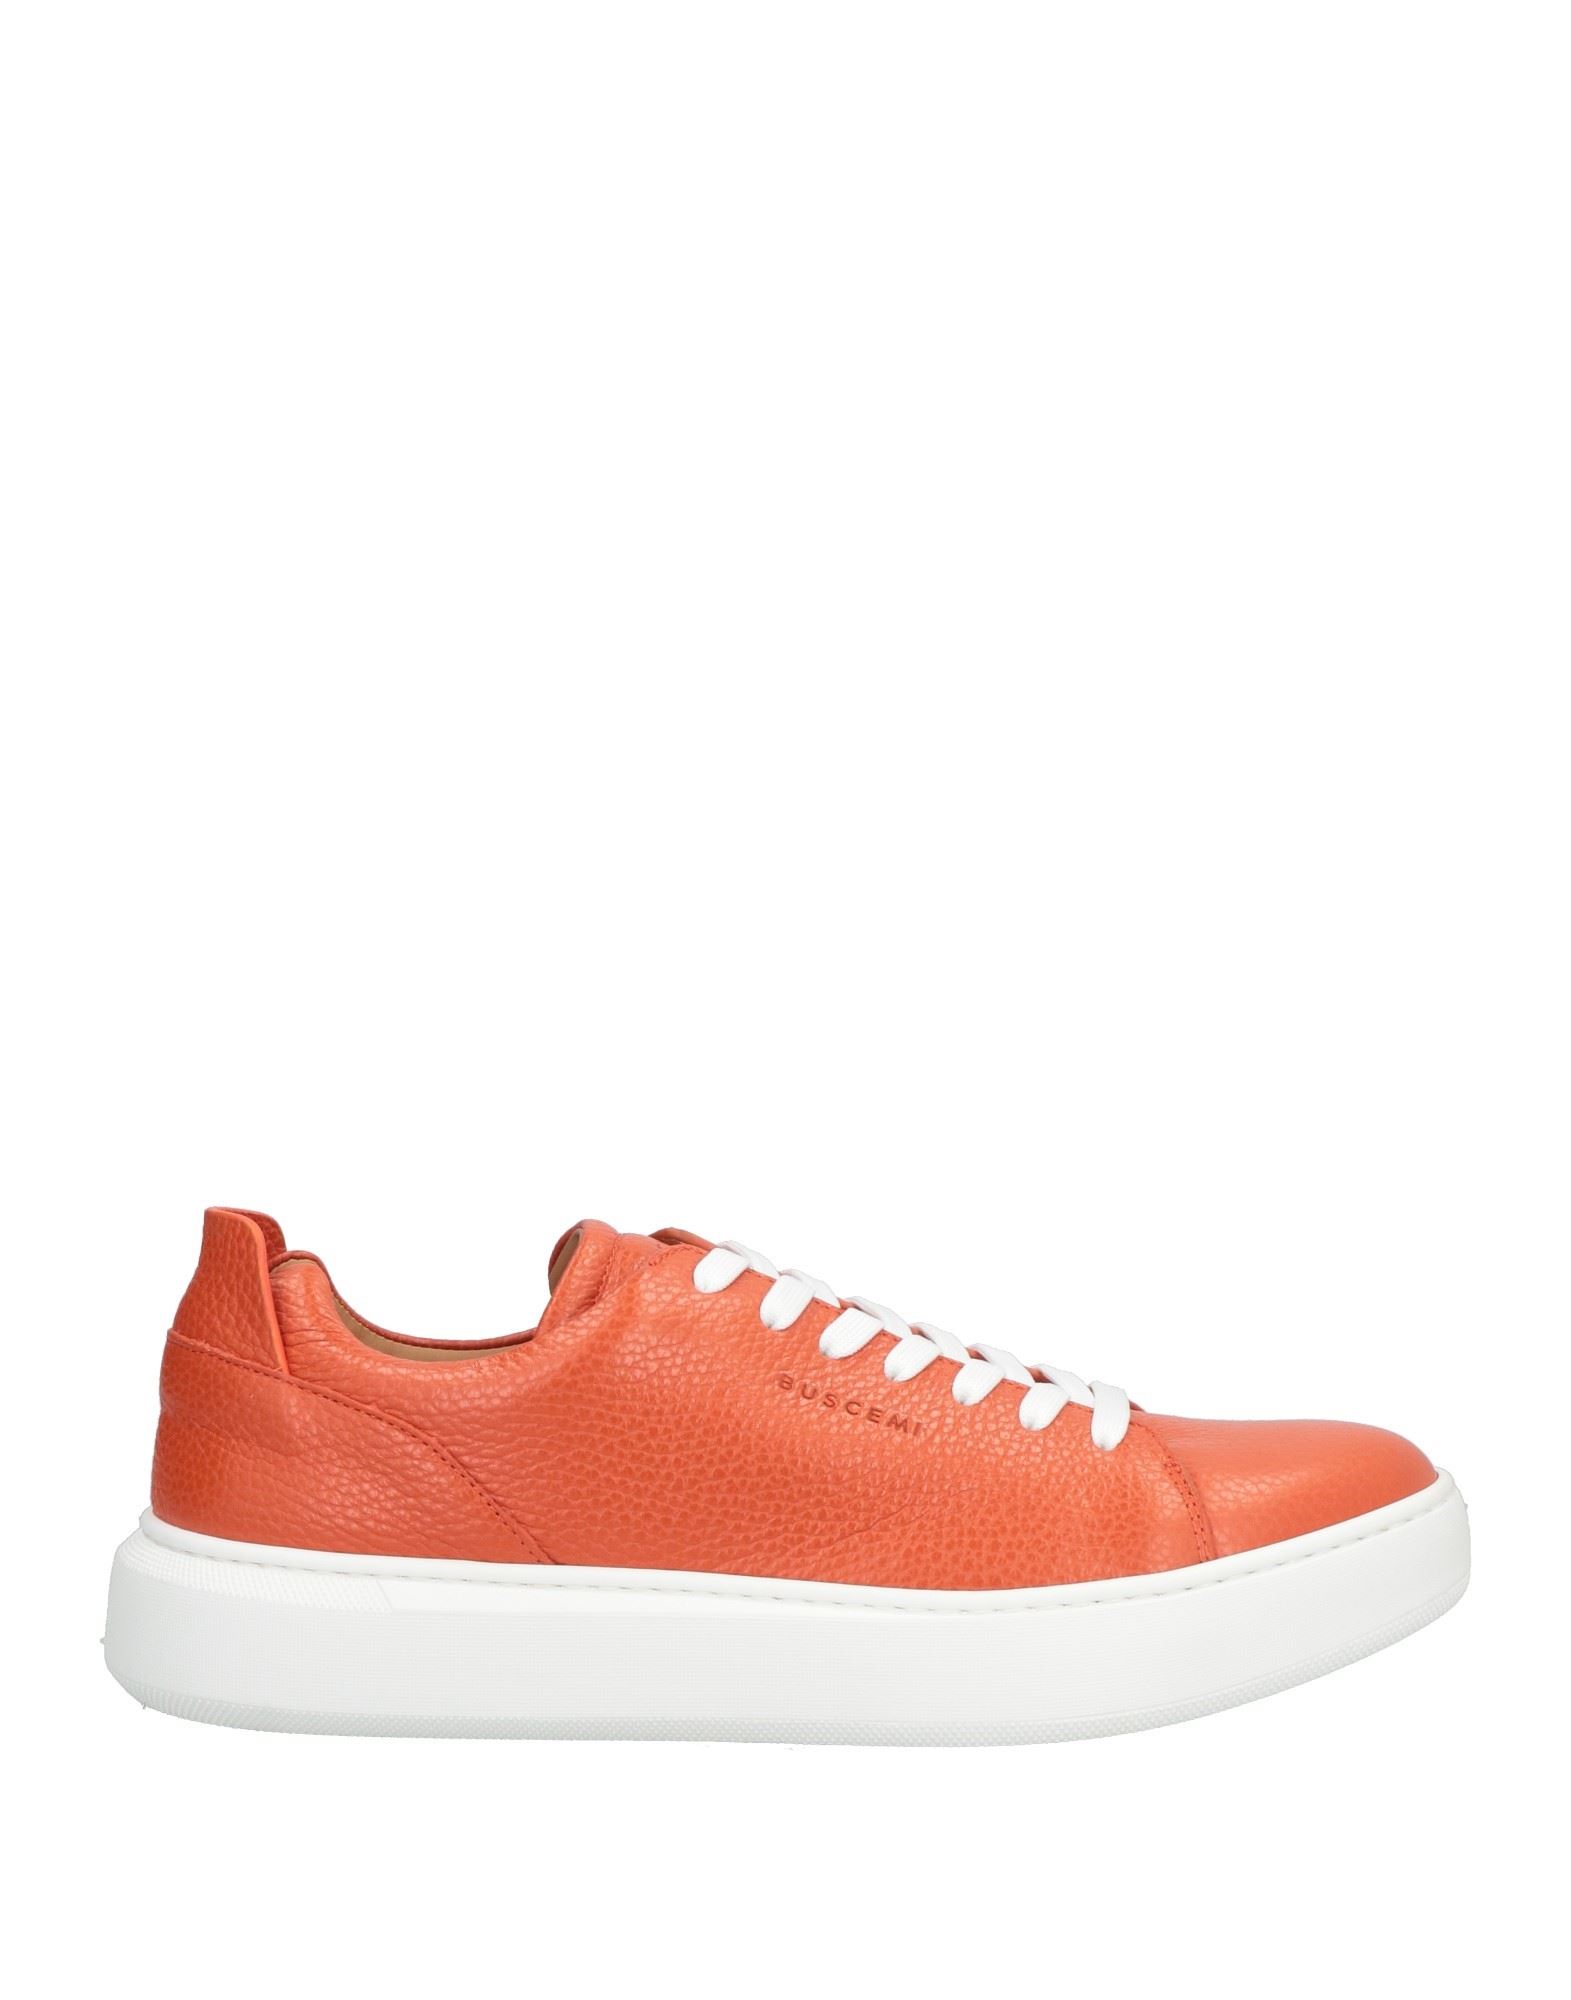 Buscemi Sneakers In Orange